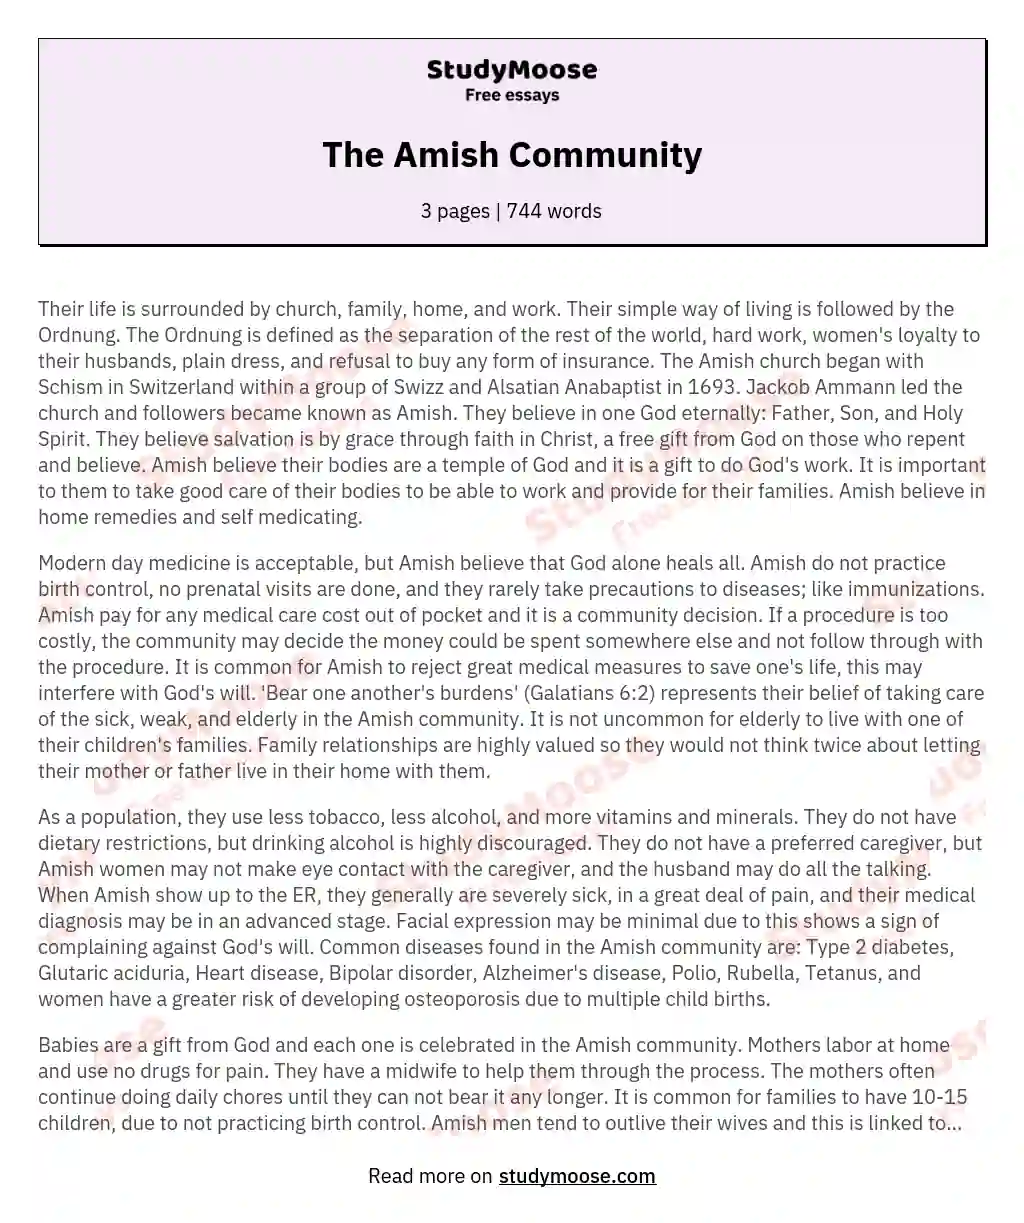 The Amish Community essay